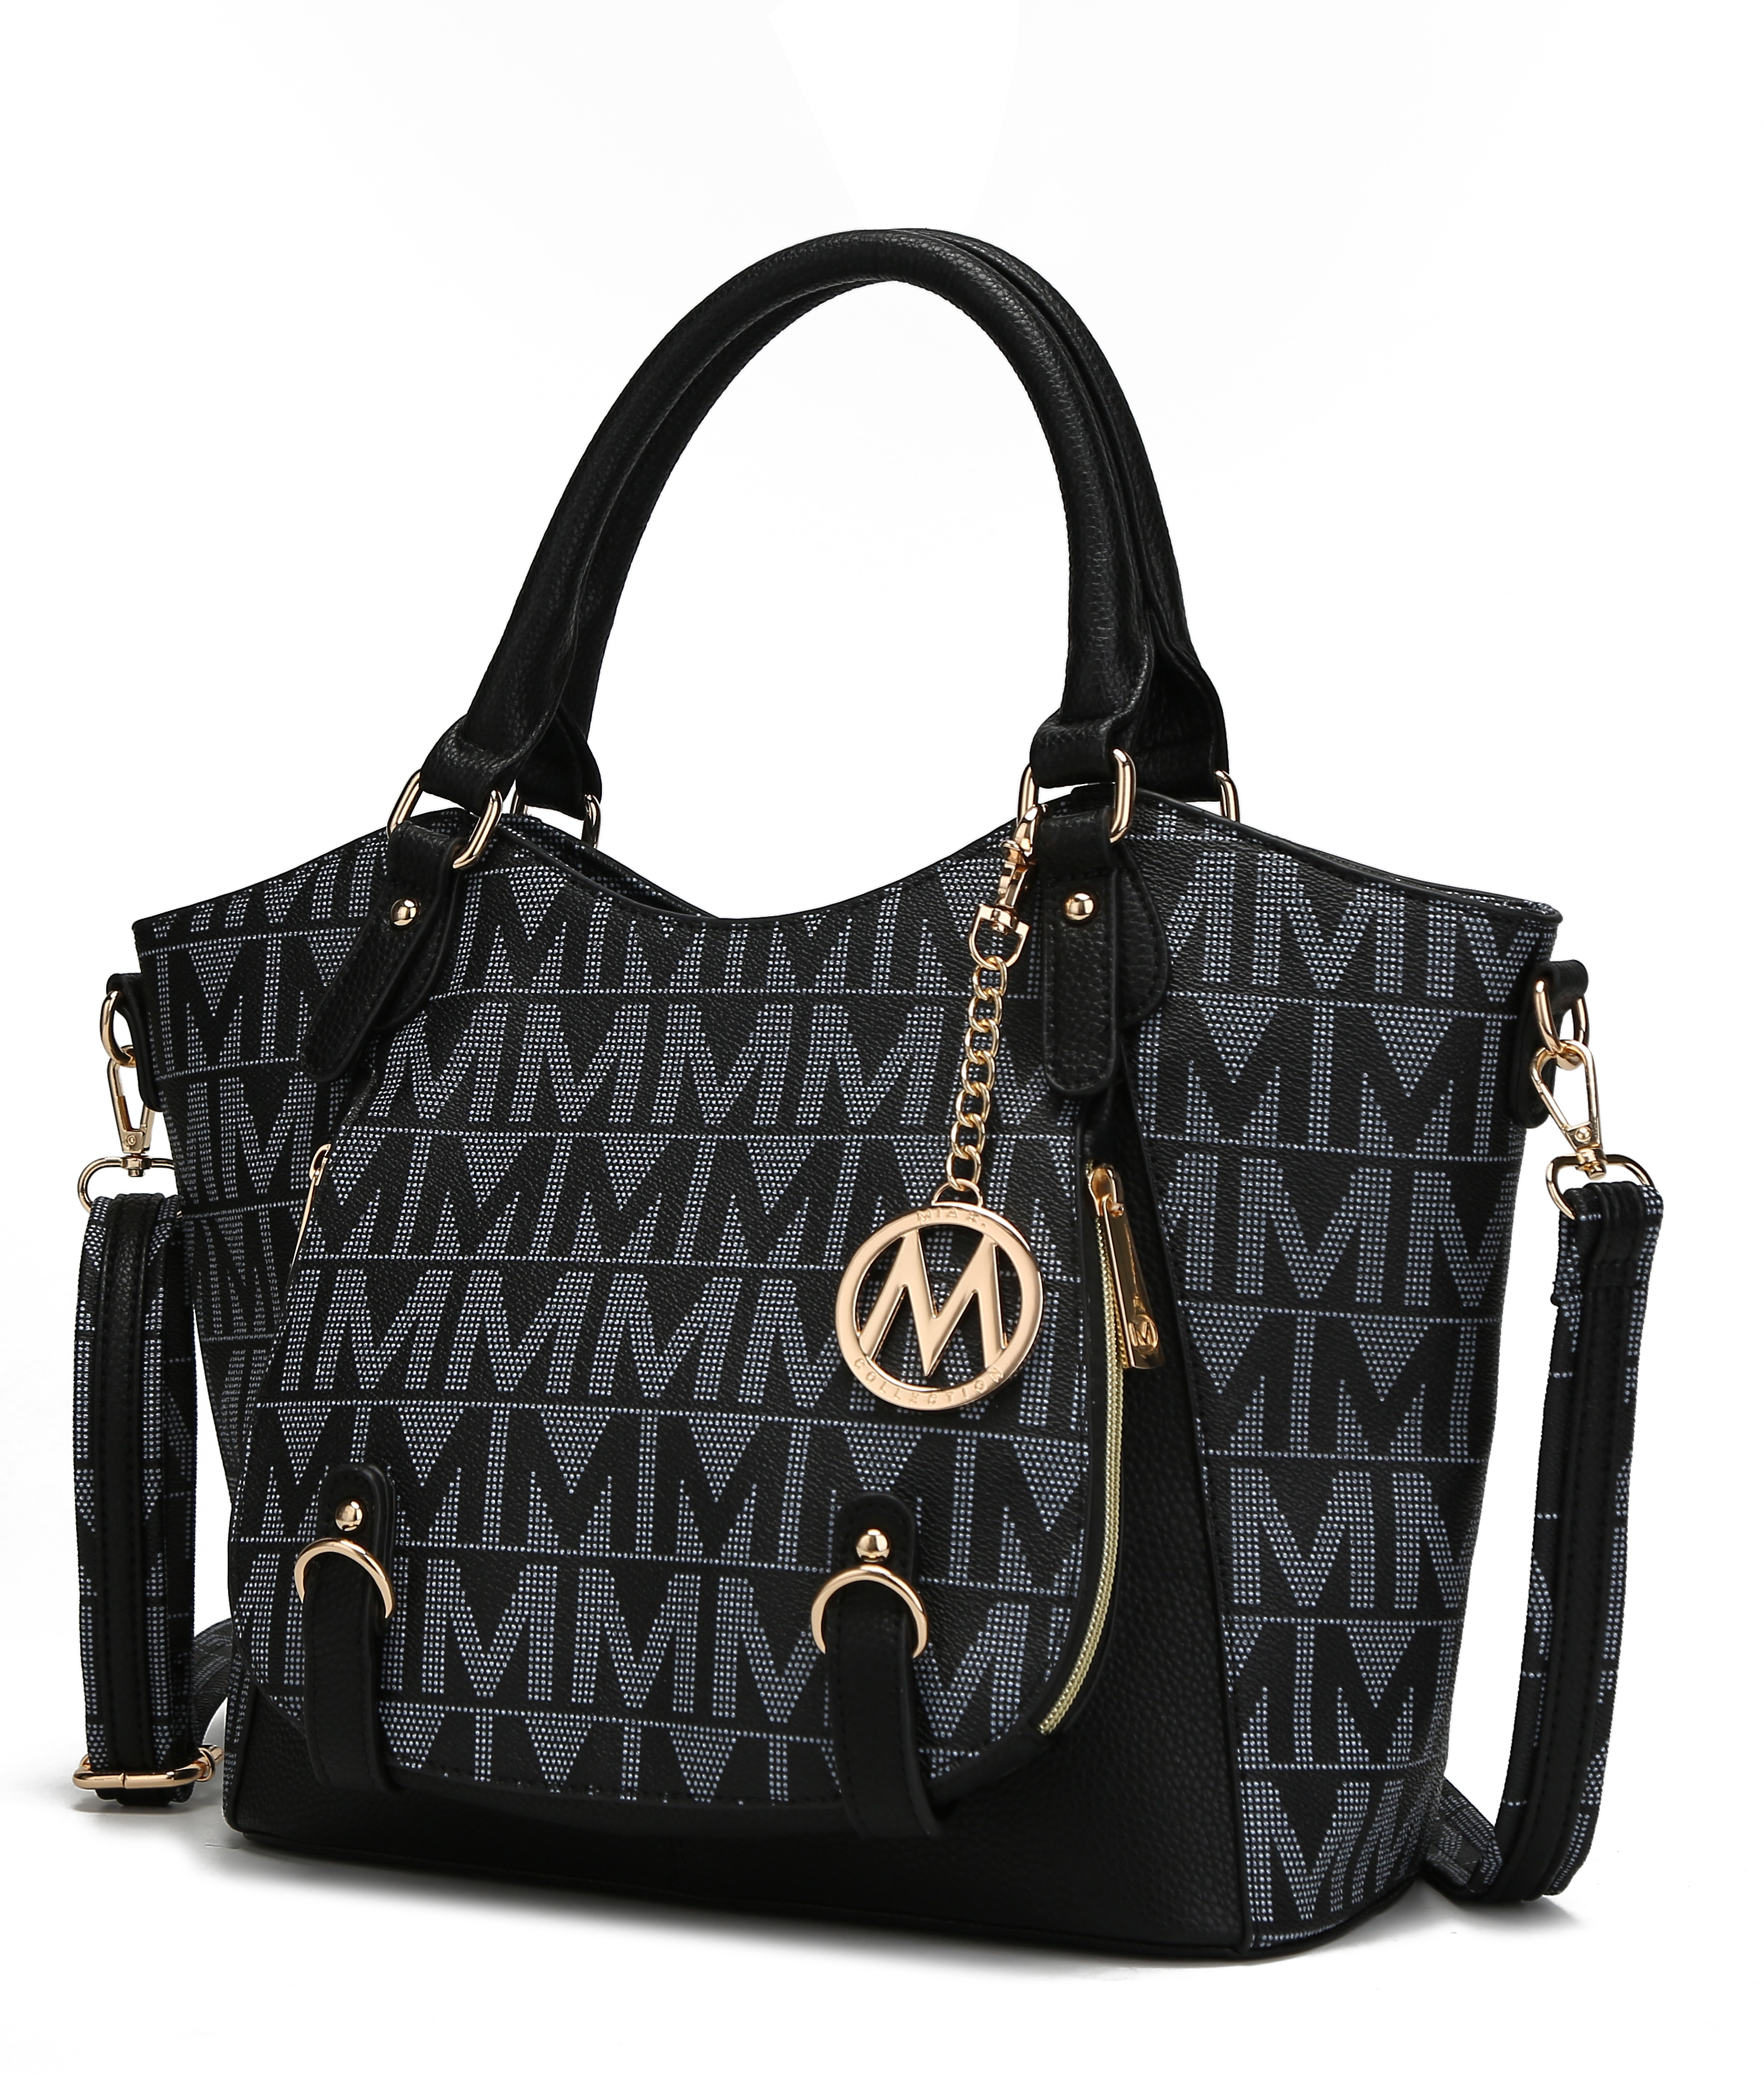 Fula Signature Satchel Bag, Black -  MKF Collection by Mia K., MK312404